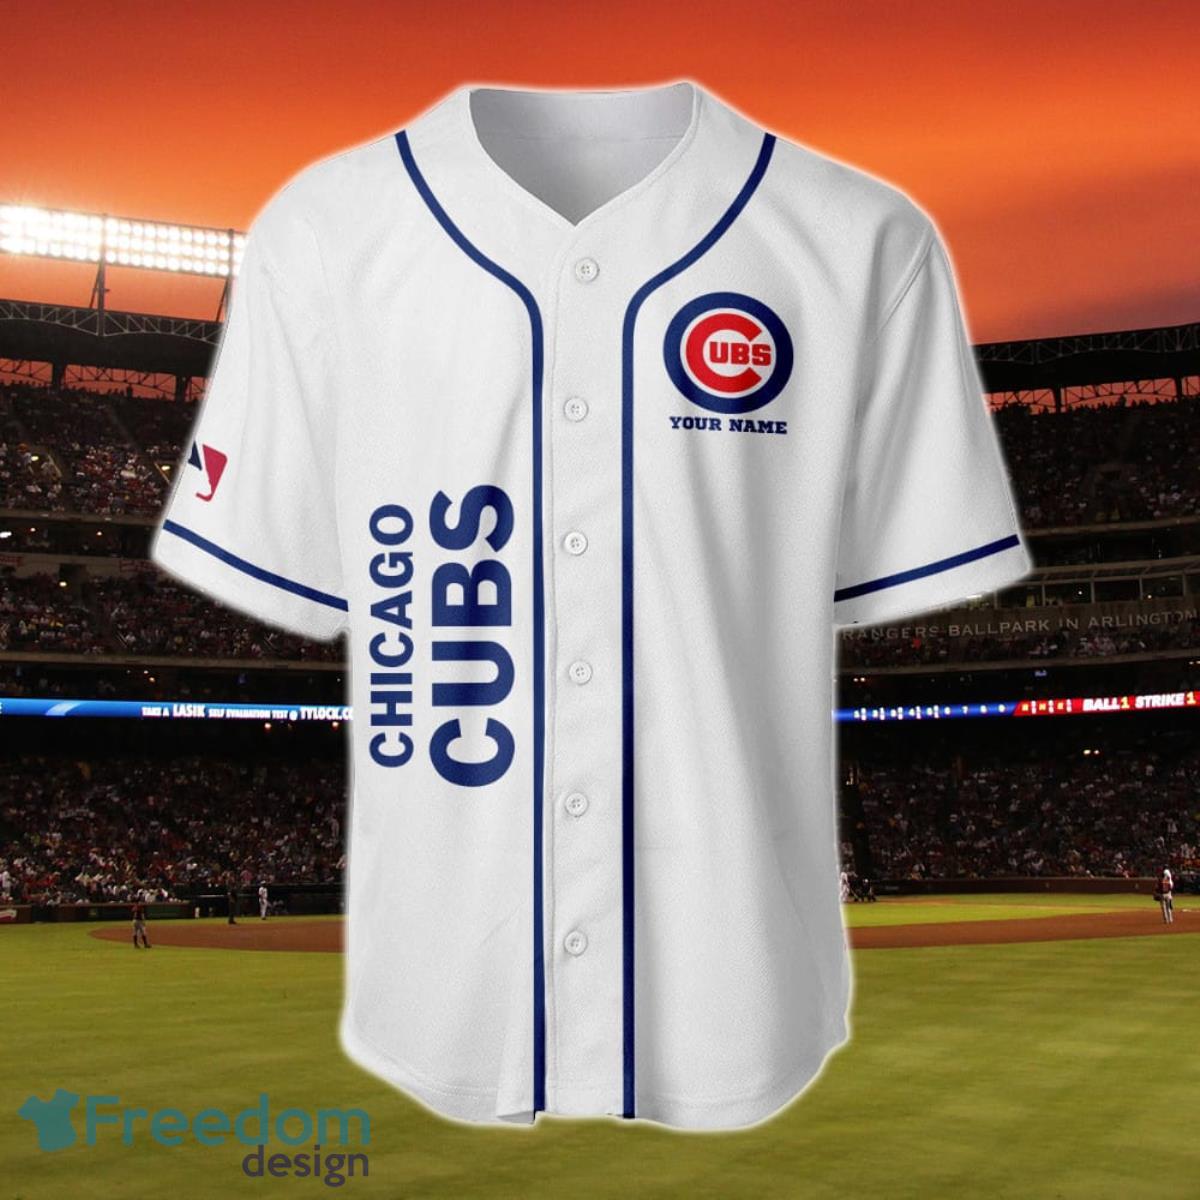 Chicago Cubs Stitch CUSTOM Baseball Jersey 